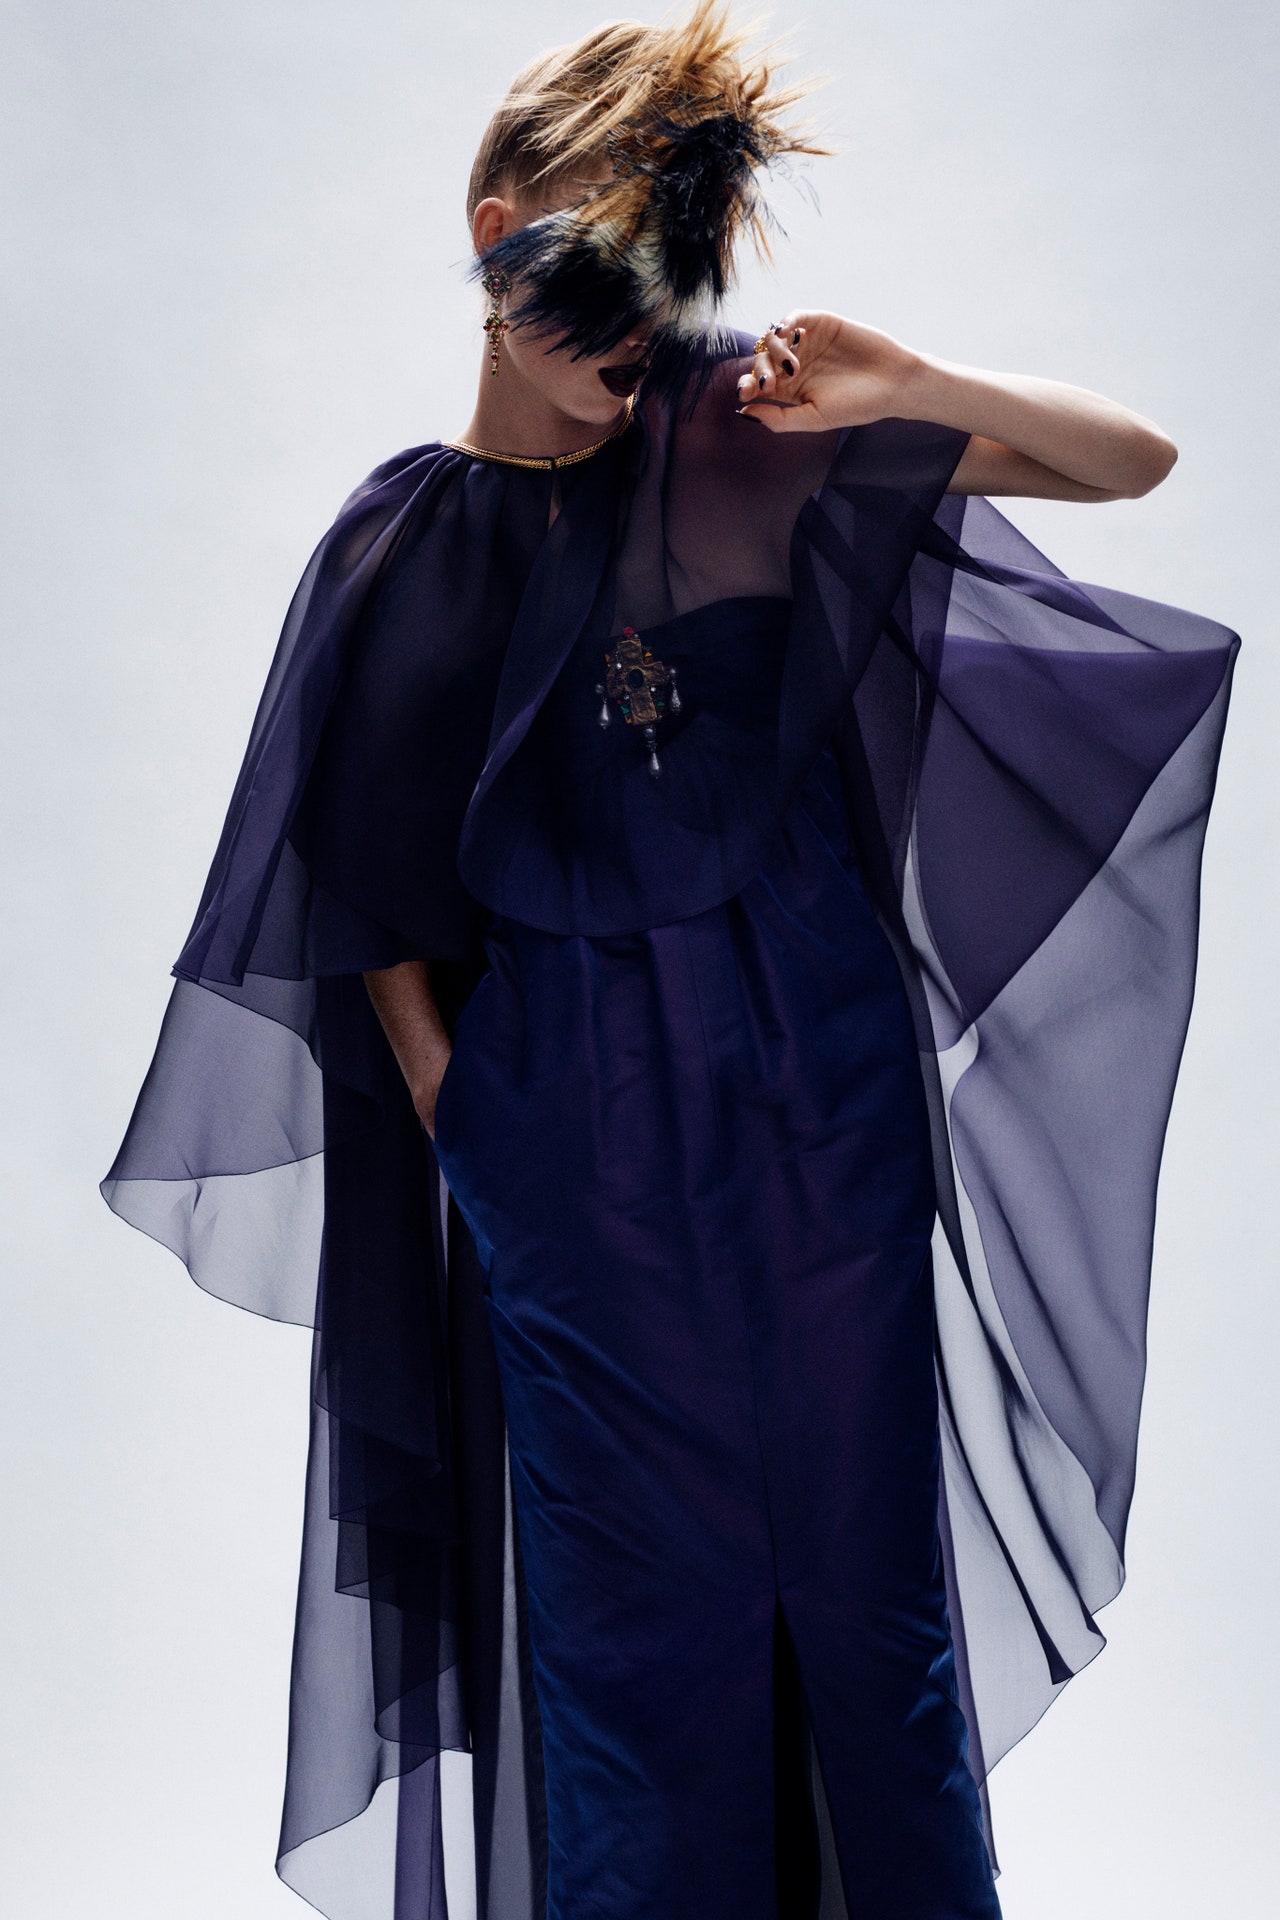 Chanel Fall Winter 2020-21 Haute Couture Lookbook